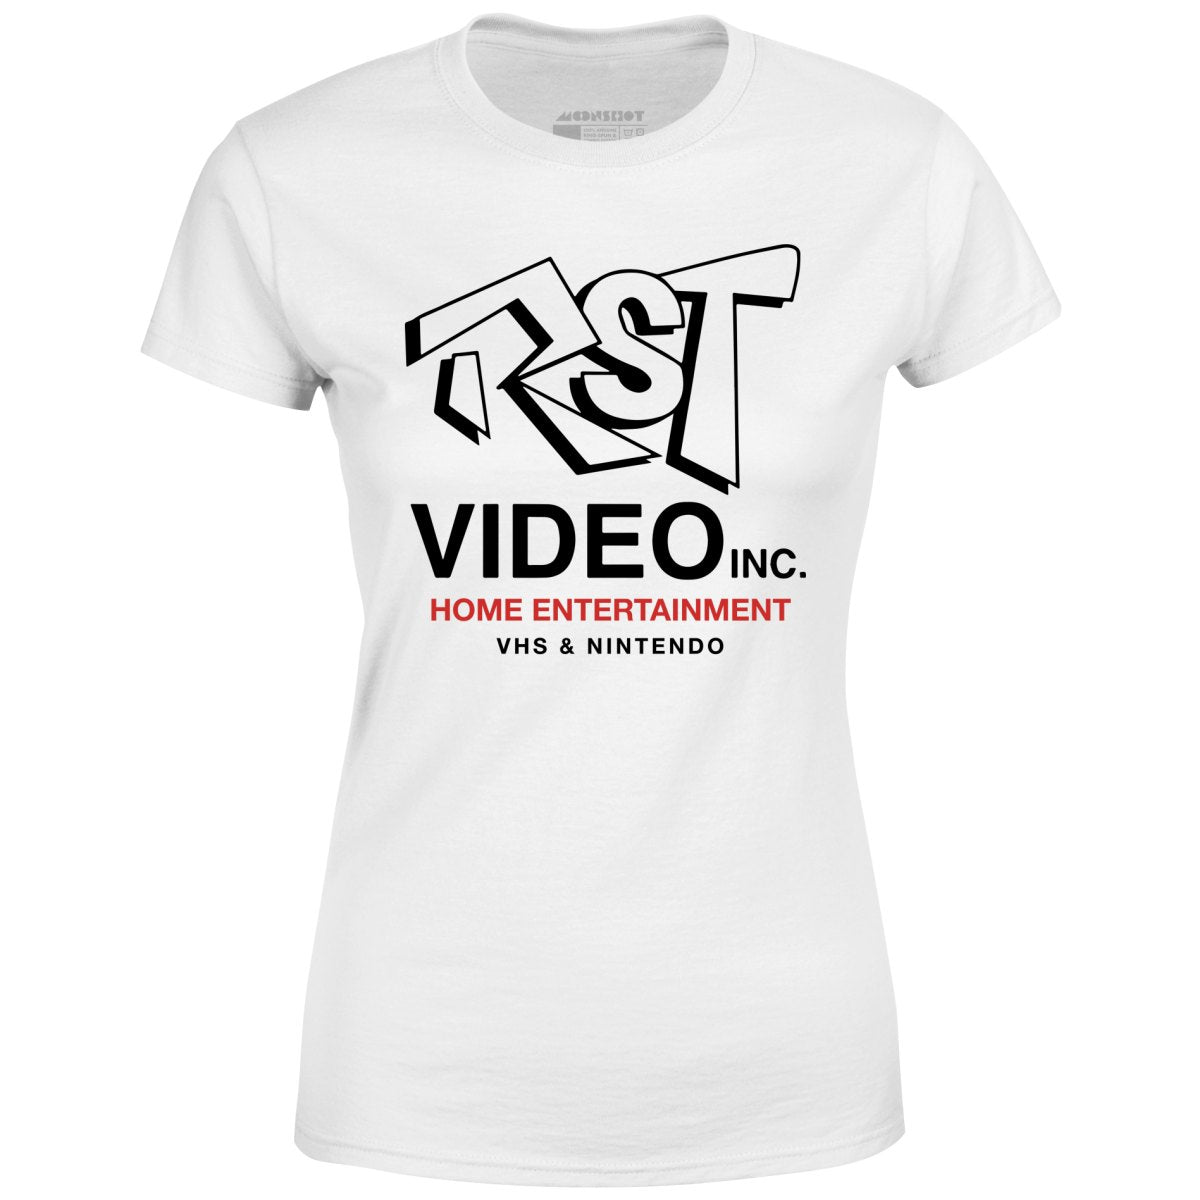 RST Video - Clerks - Women's T-Shirt